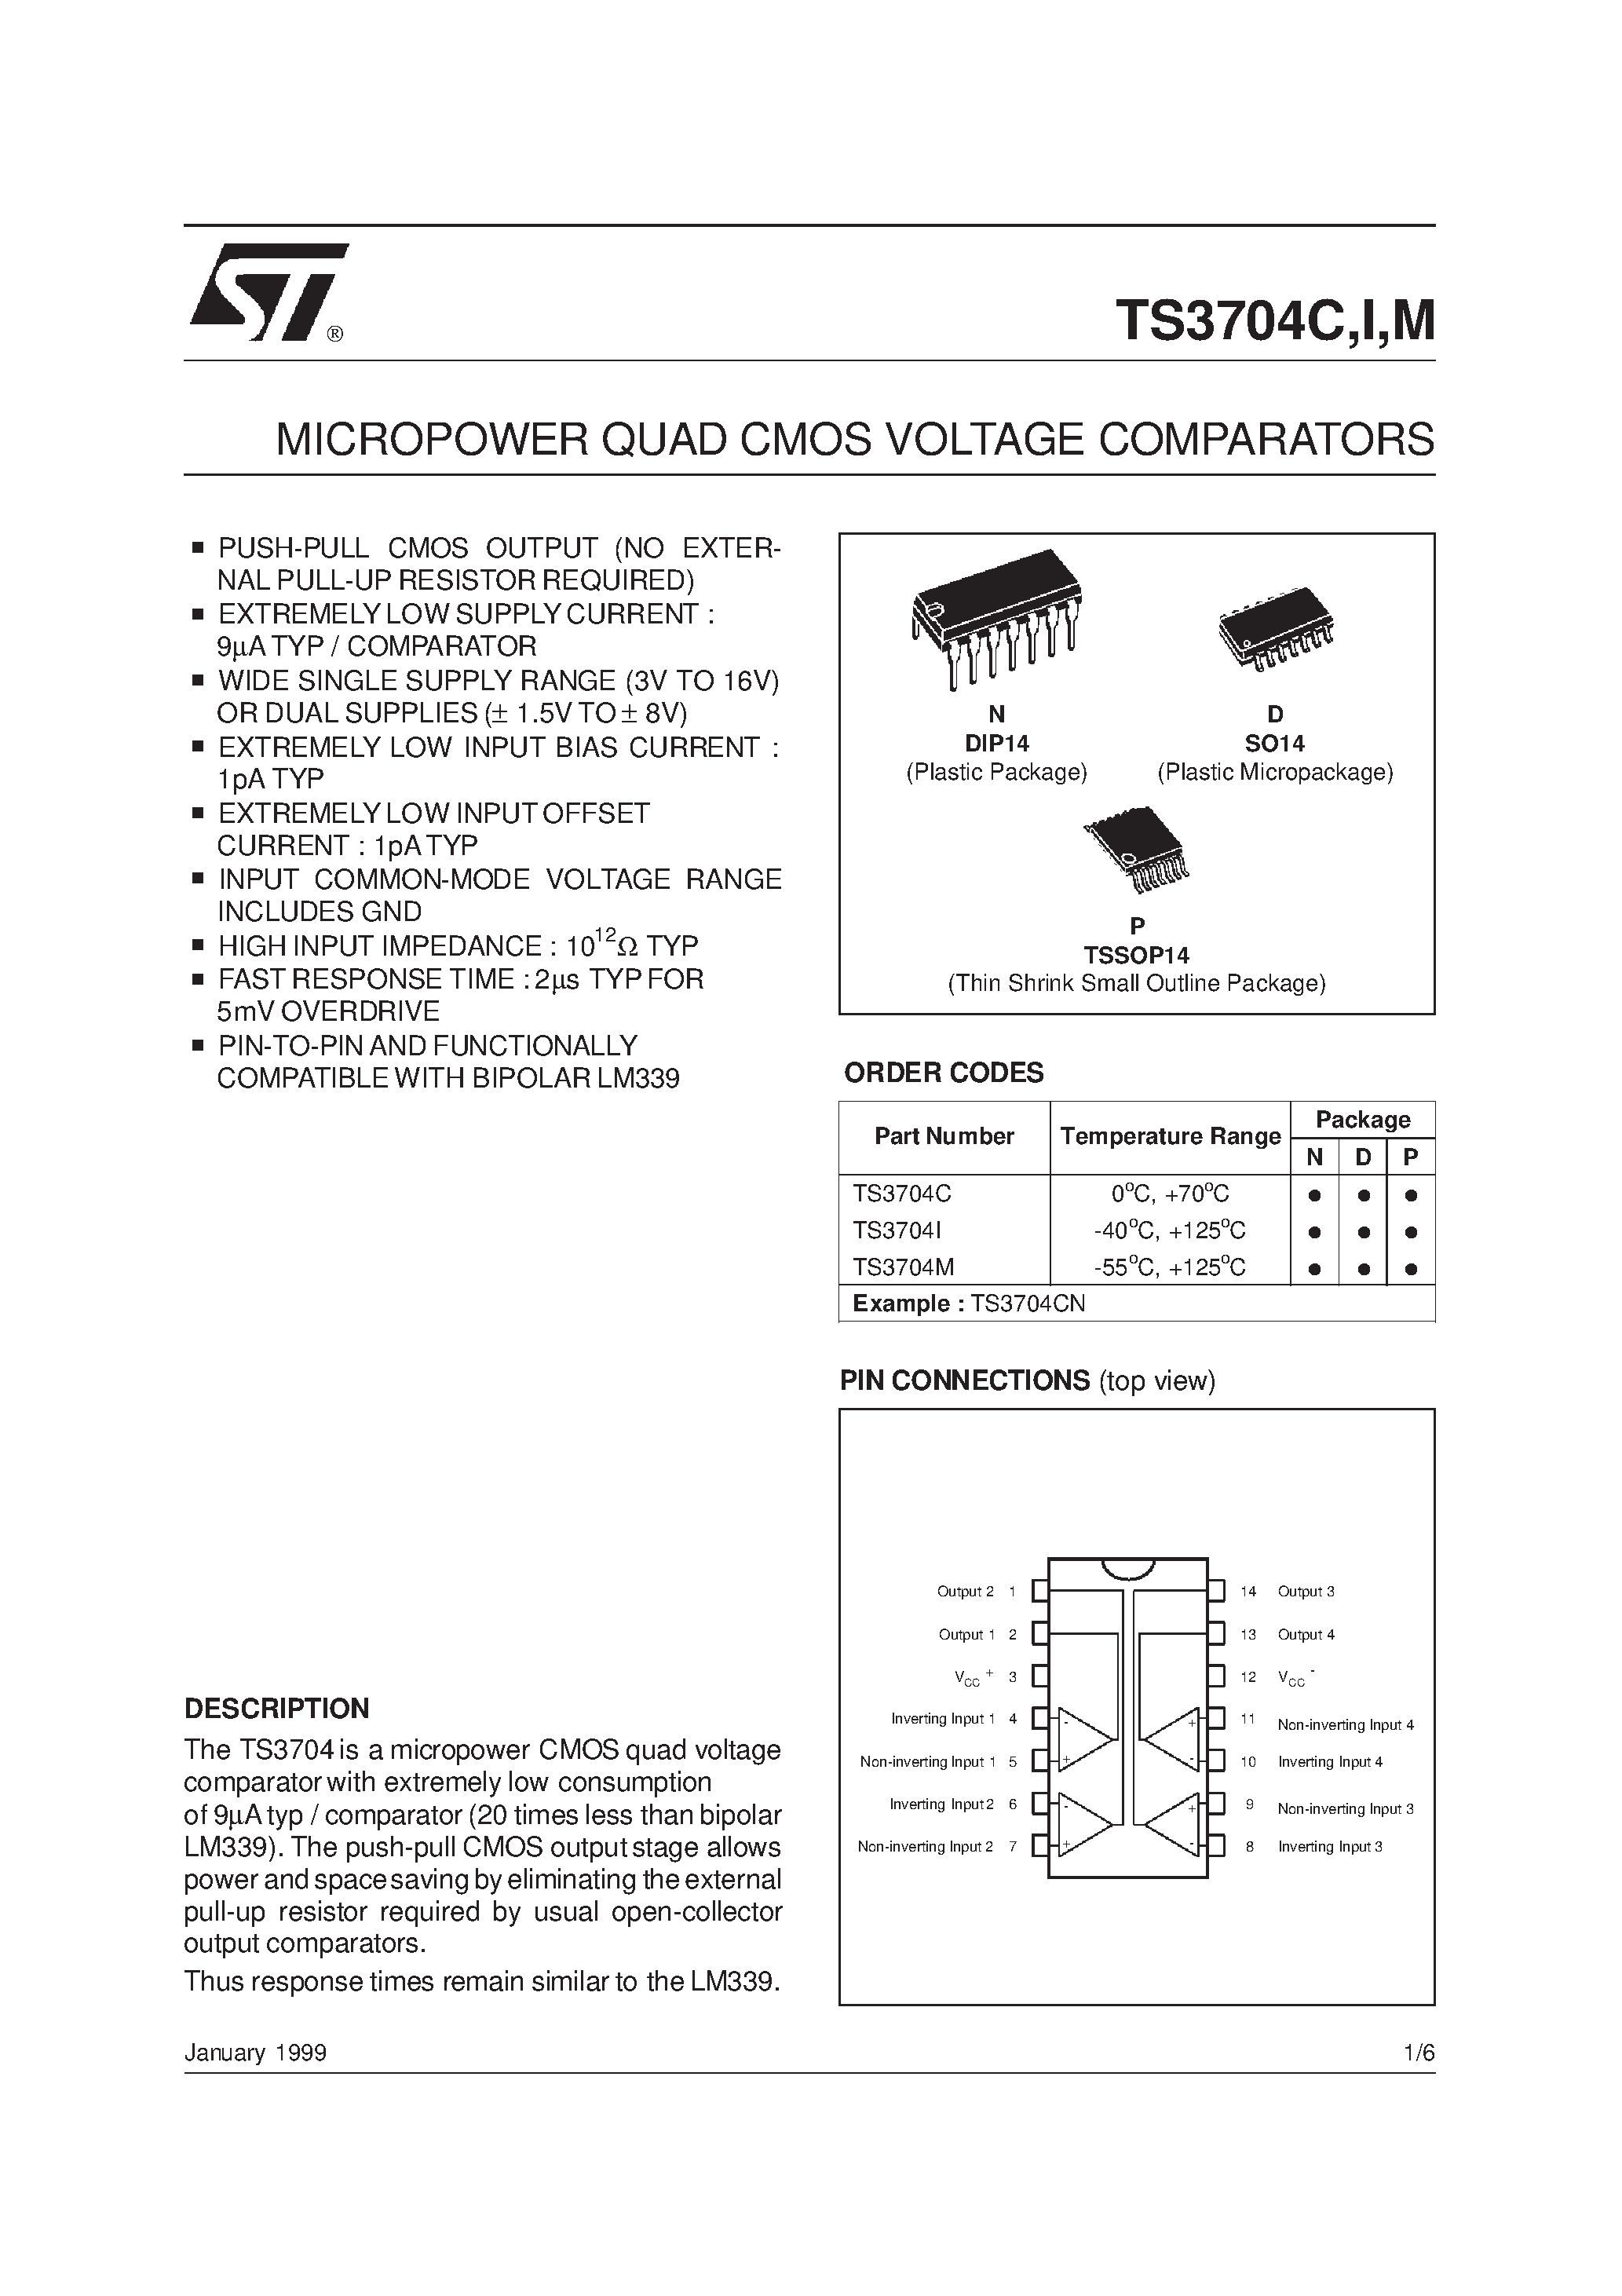 Datasheet TS3704M - MICROPOWER QUAD CMOS VOLTAGE COMPARATORS page 1